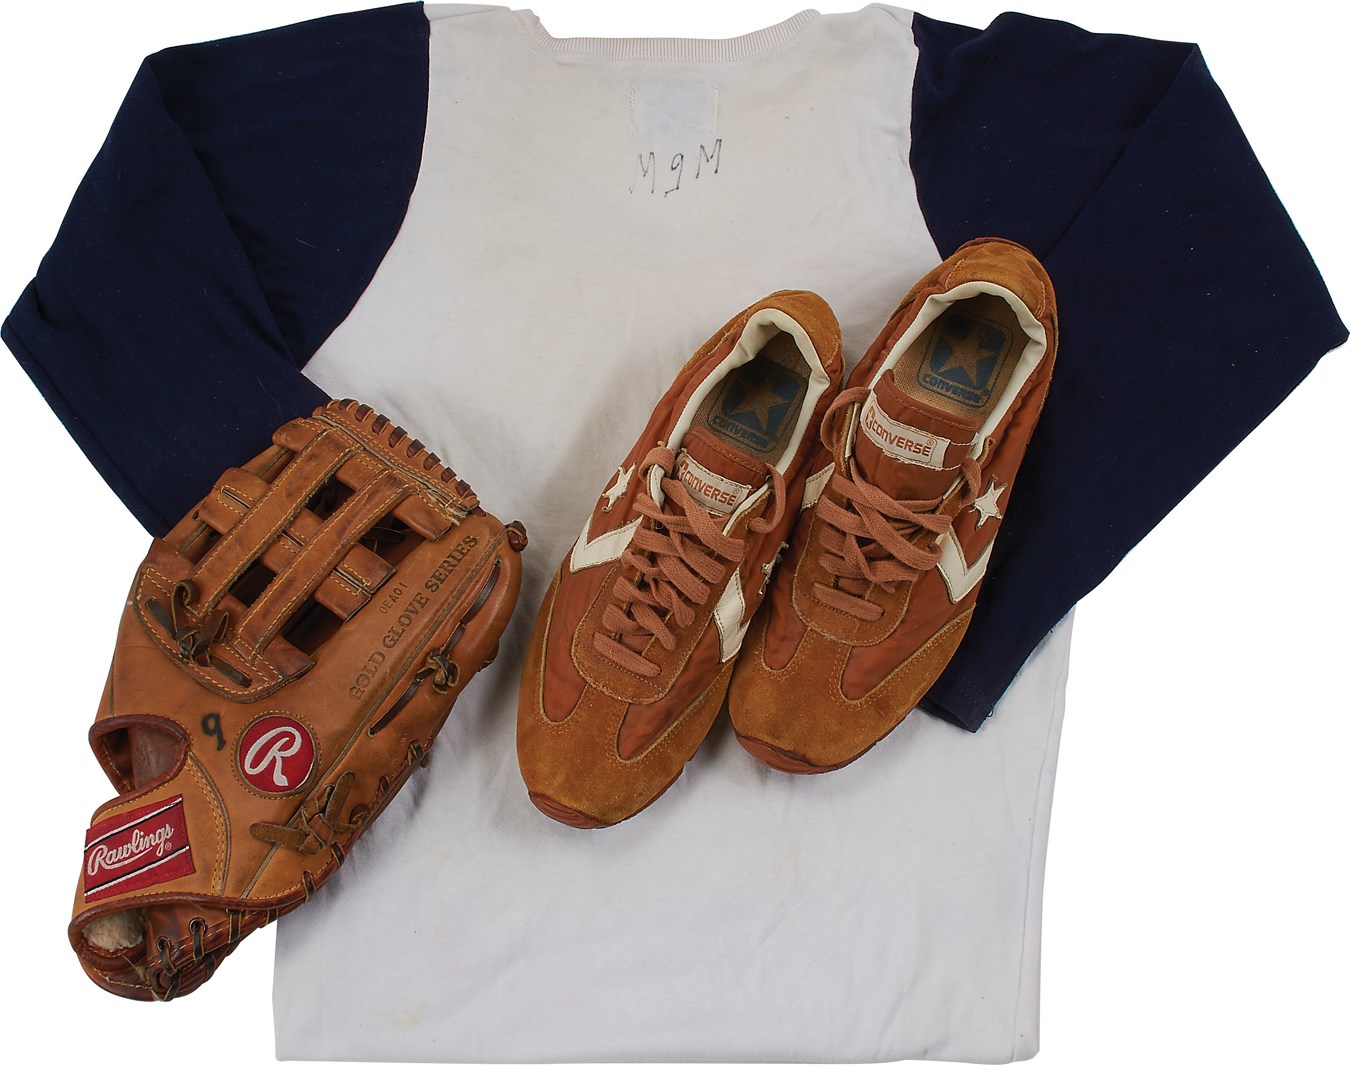 Baseball Equipment - 1970s-'80s Minnie Minoso Game Used Glove, Undershirt and Turf Shoes (Minoso LOA)